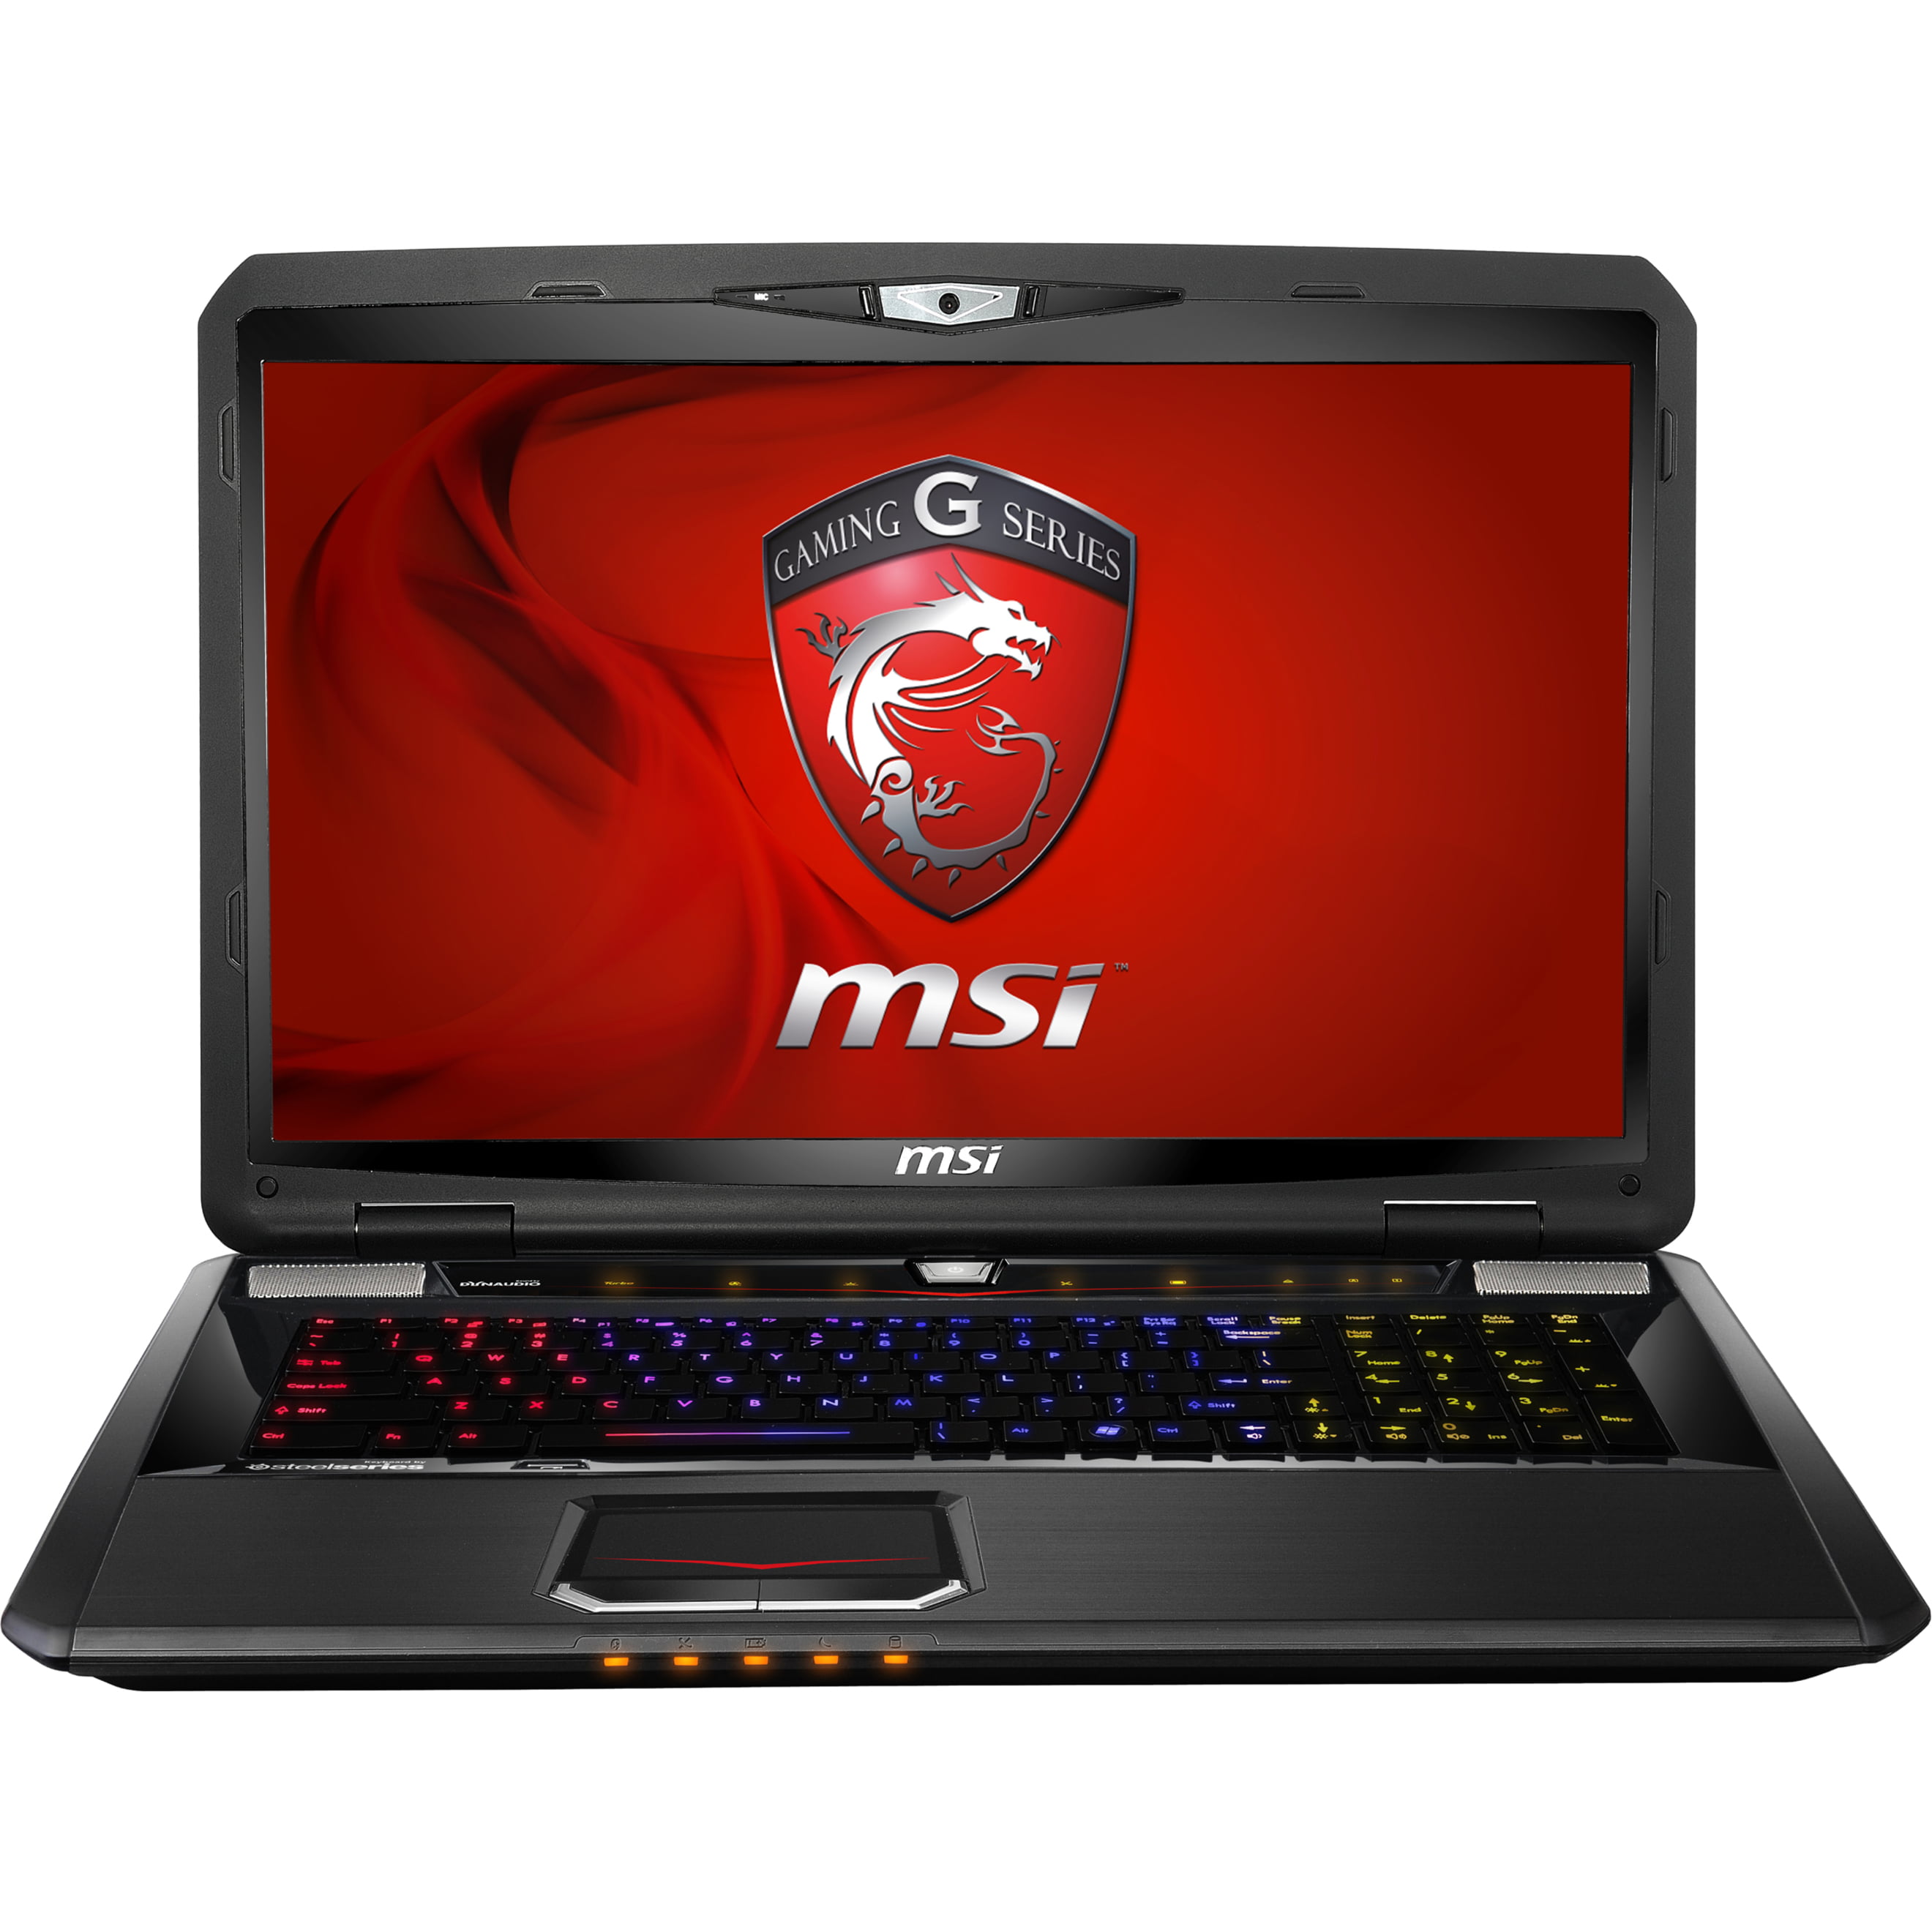 Msi g32cq5p. Ноутбук MSI gt70 Dominator. Ноутбук MSI gt70 0nc. MSI gt70 Red Dragon. MSI gs70 Stealth.